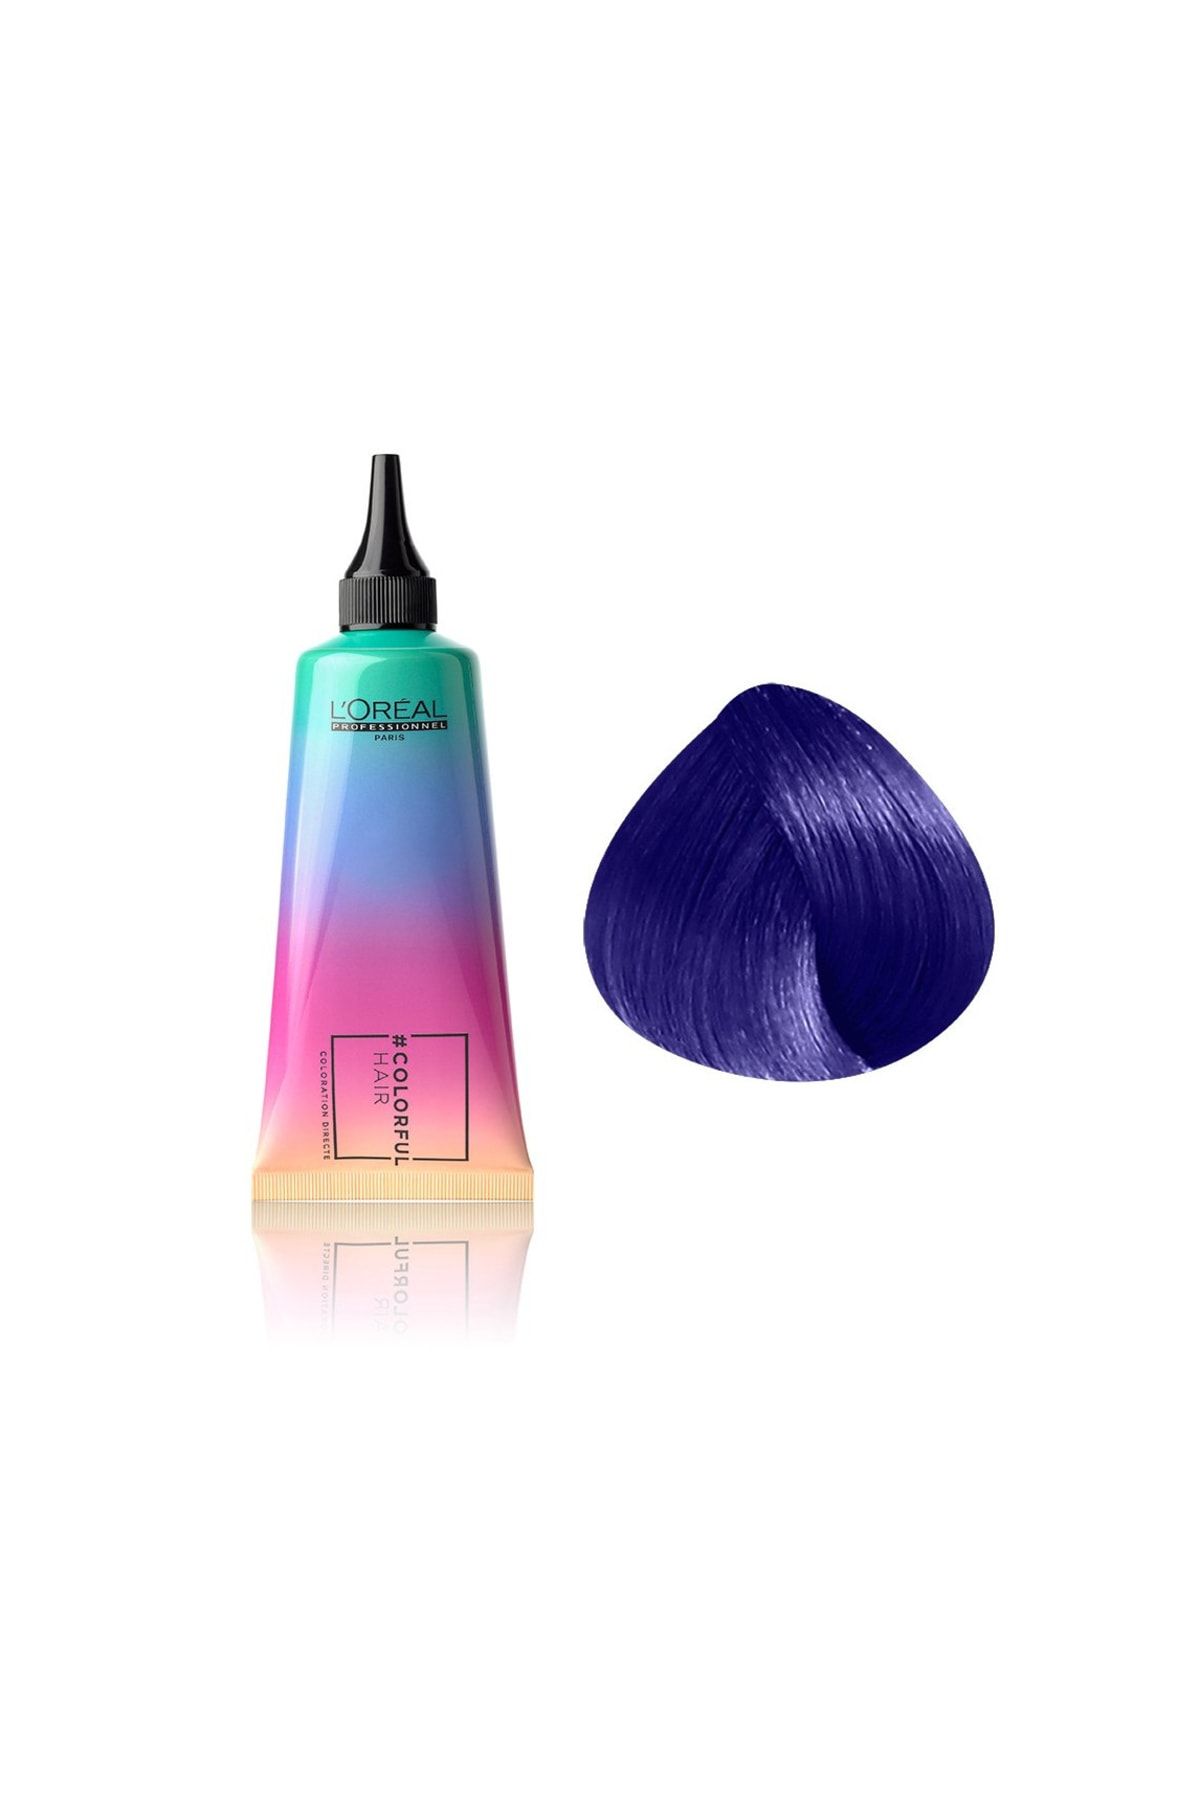 L'oreal Professionnel Colorful Hair Navy Blue Natural Lacivert Defined Semi Permament Ammonia Free Hair Color Cream 90ml